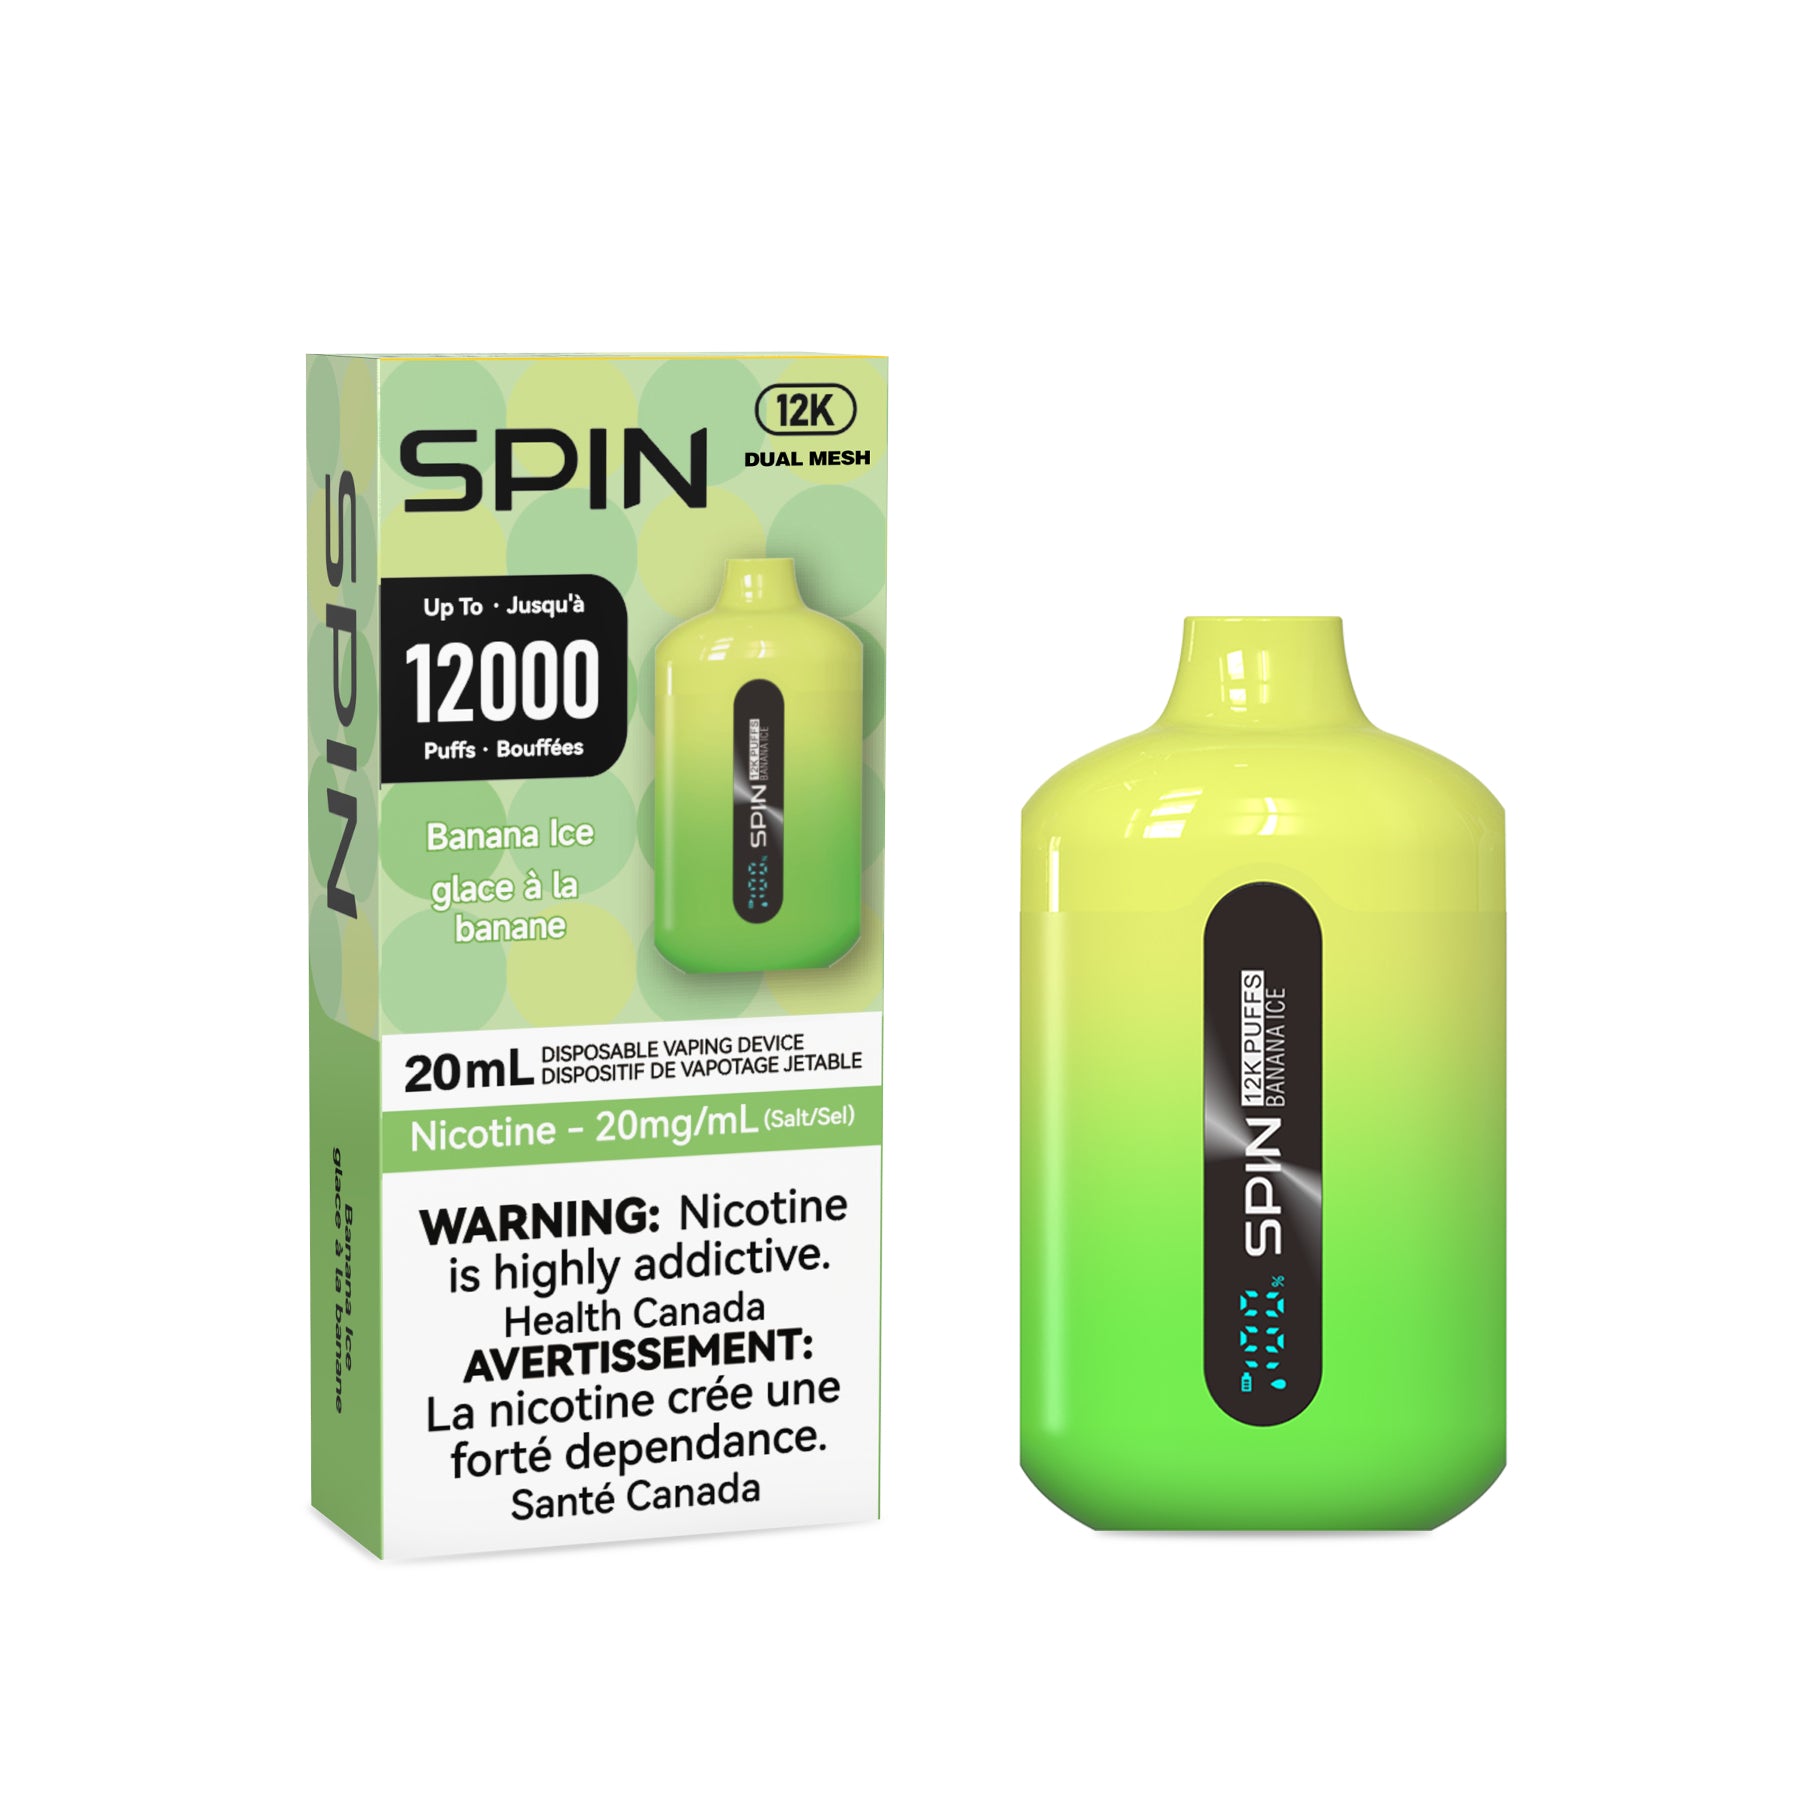 Spin 12K (12000) Disposable Vape - Banana Ice